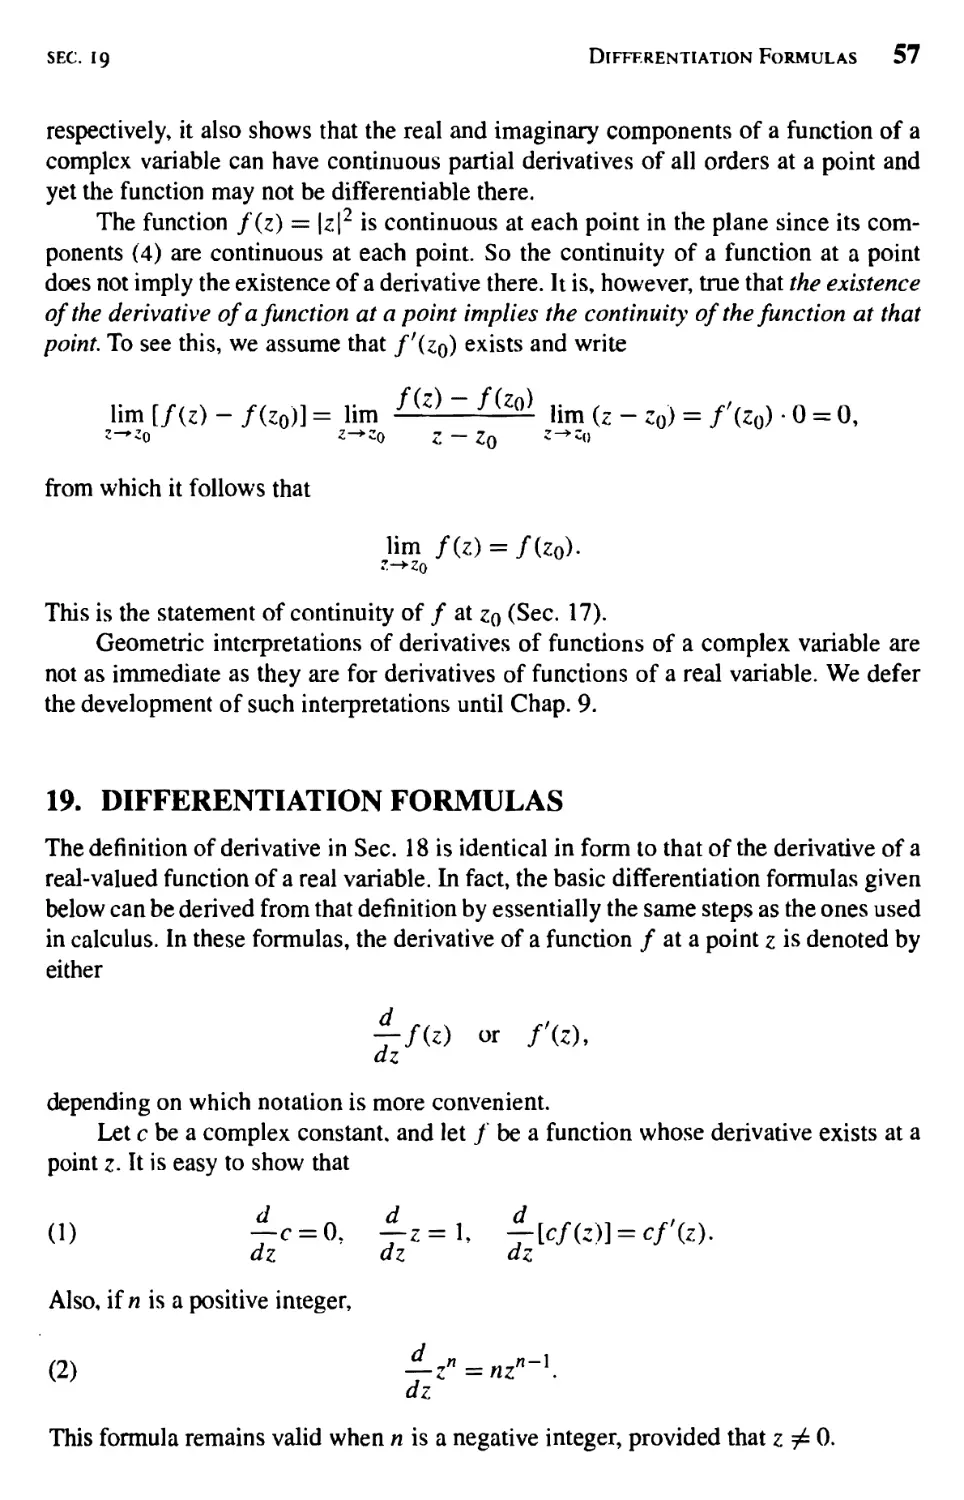 Differentiation Formulas